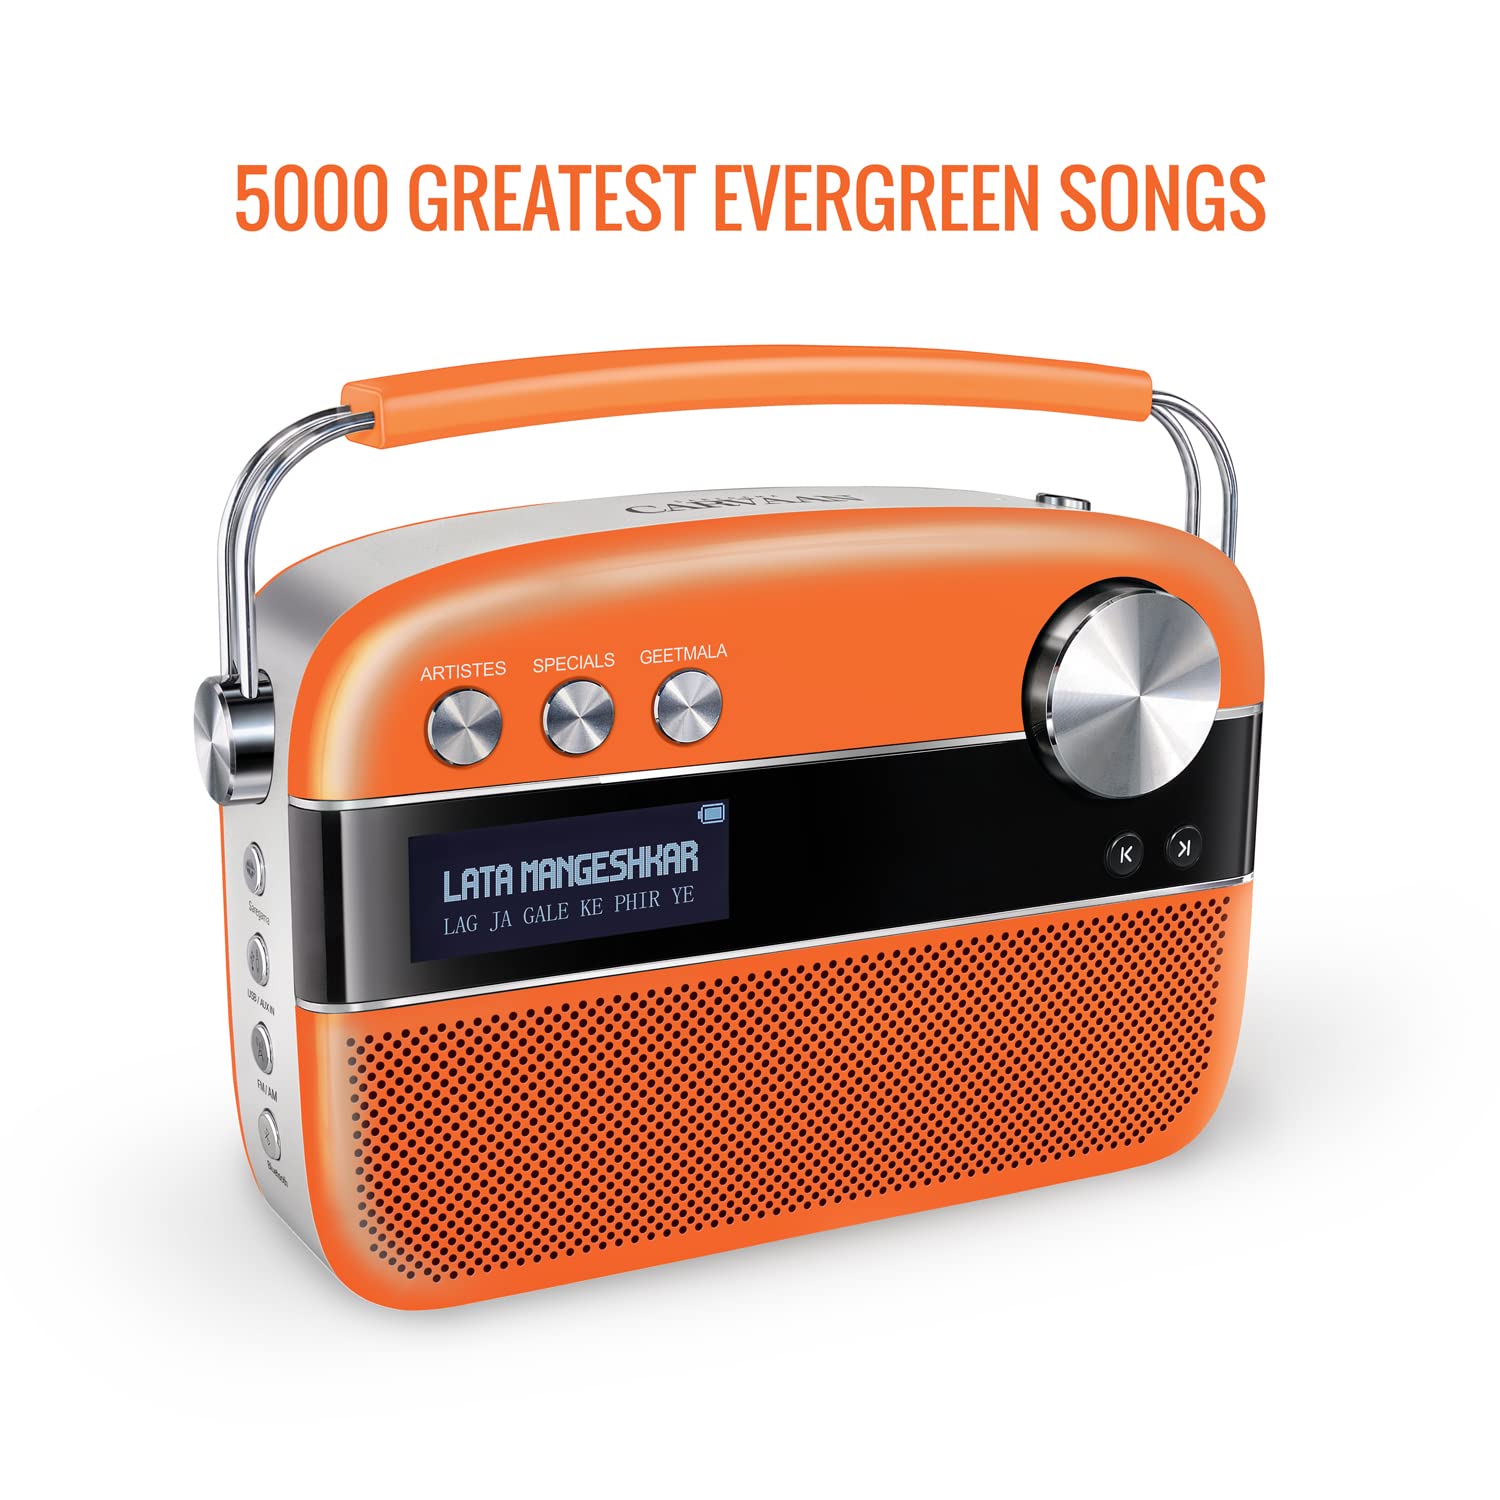 Saregama Carvaan Premium (Pop Colour Range) Hindi - Portable Music Player with 5000 Preloaded Songs, FM/BT/AUX (Candy Orange) - Mahajan Electronics Online